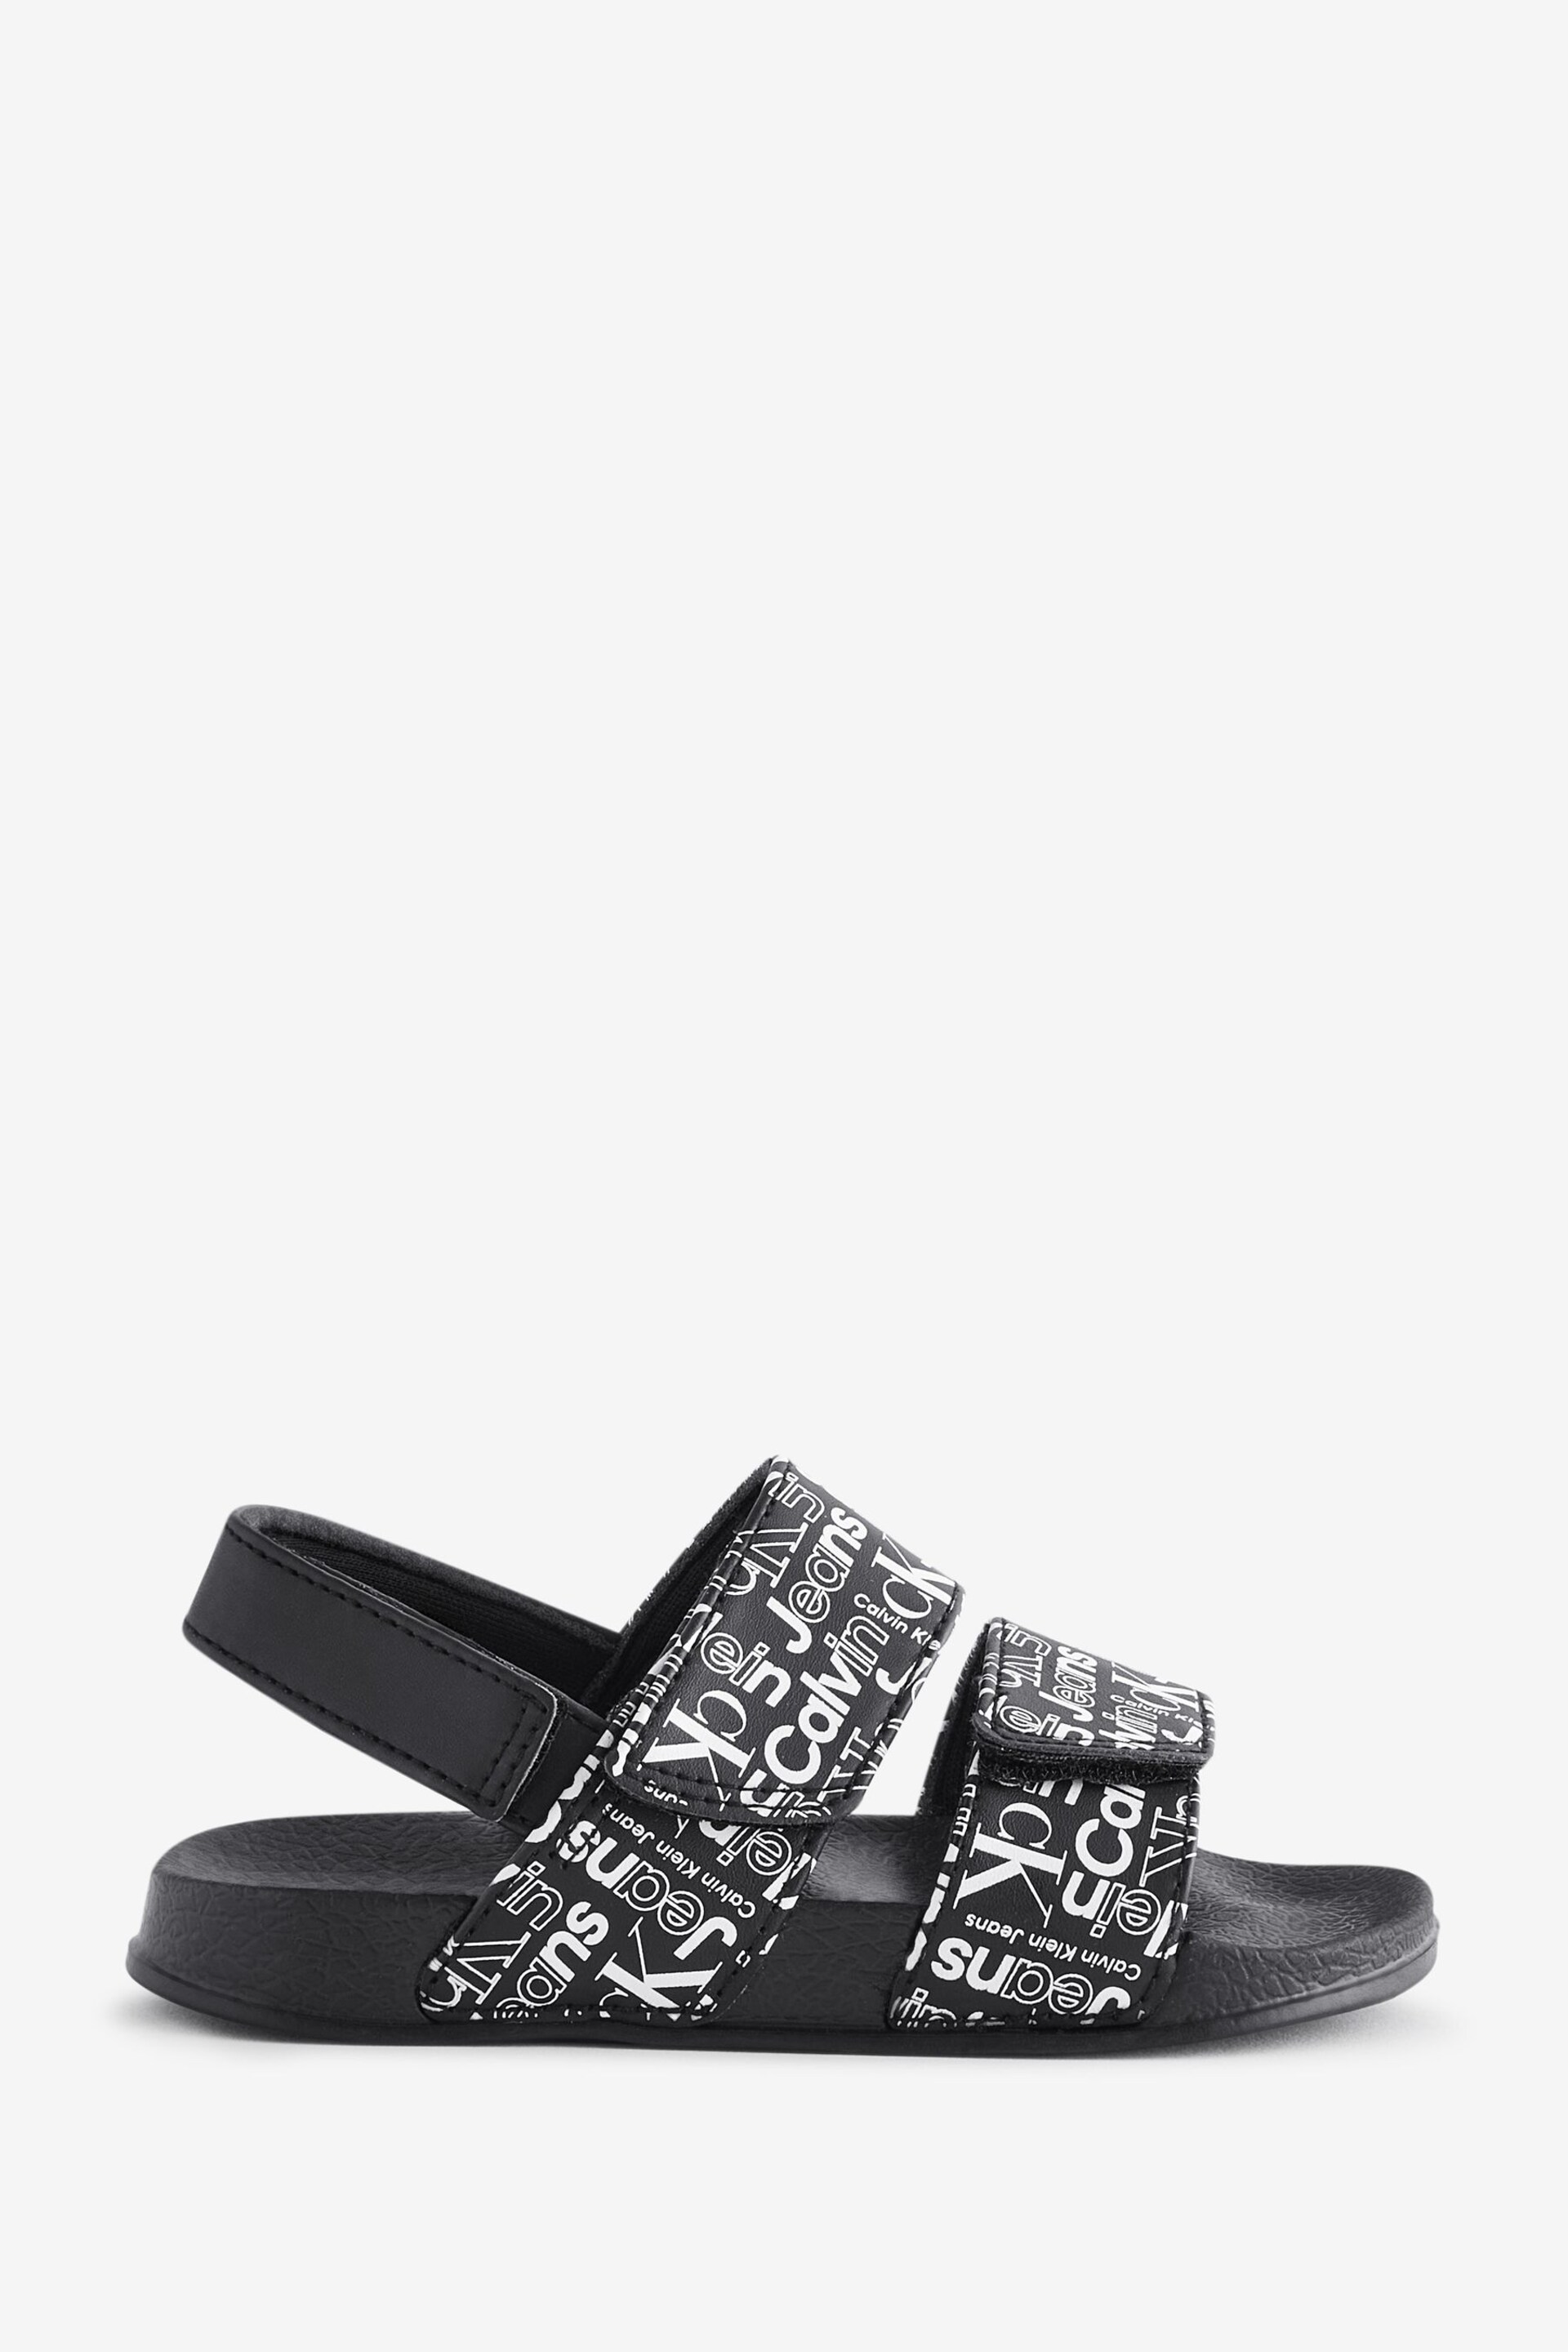 Calvin Klein Black Aop Velcro Sandals - Image 1 of 1